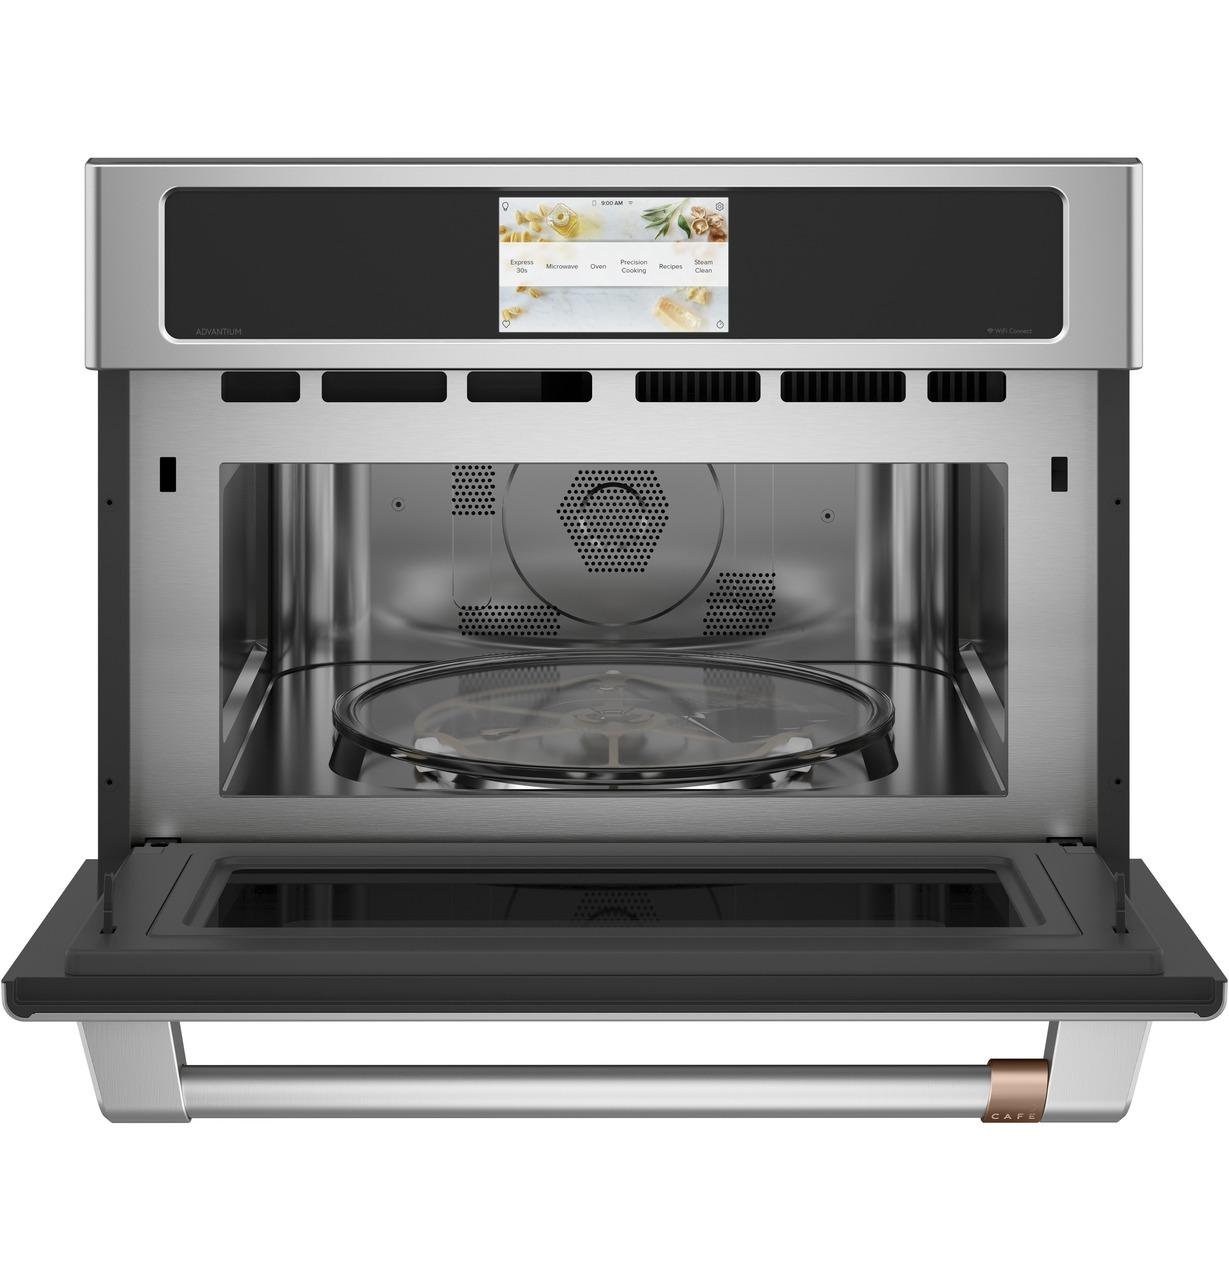 Cafe Caf(eback)™ 27" Smart Five in One Oven with 120V Advantium® Technology